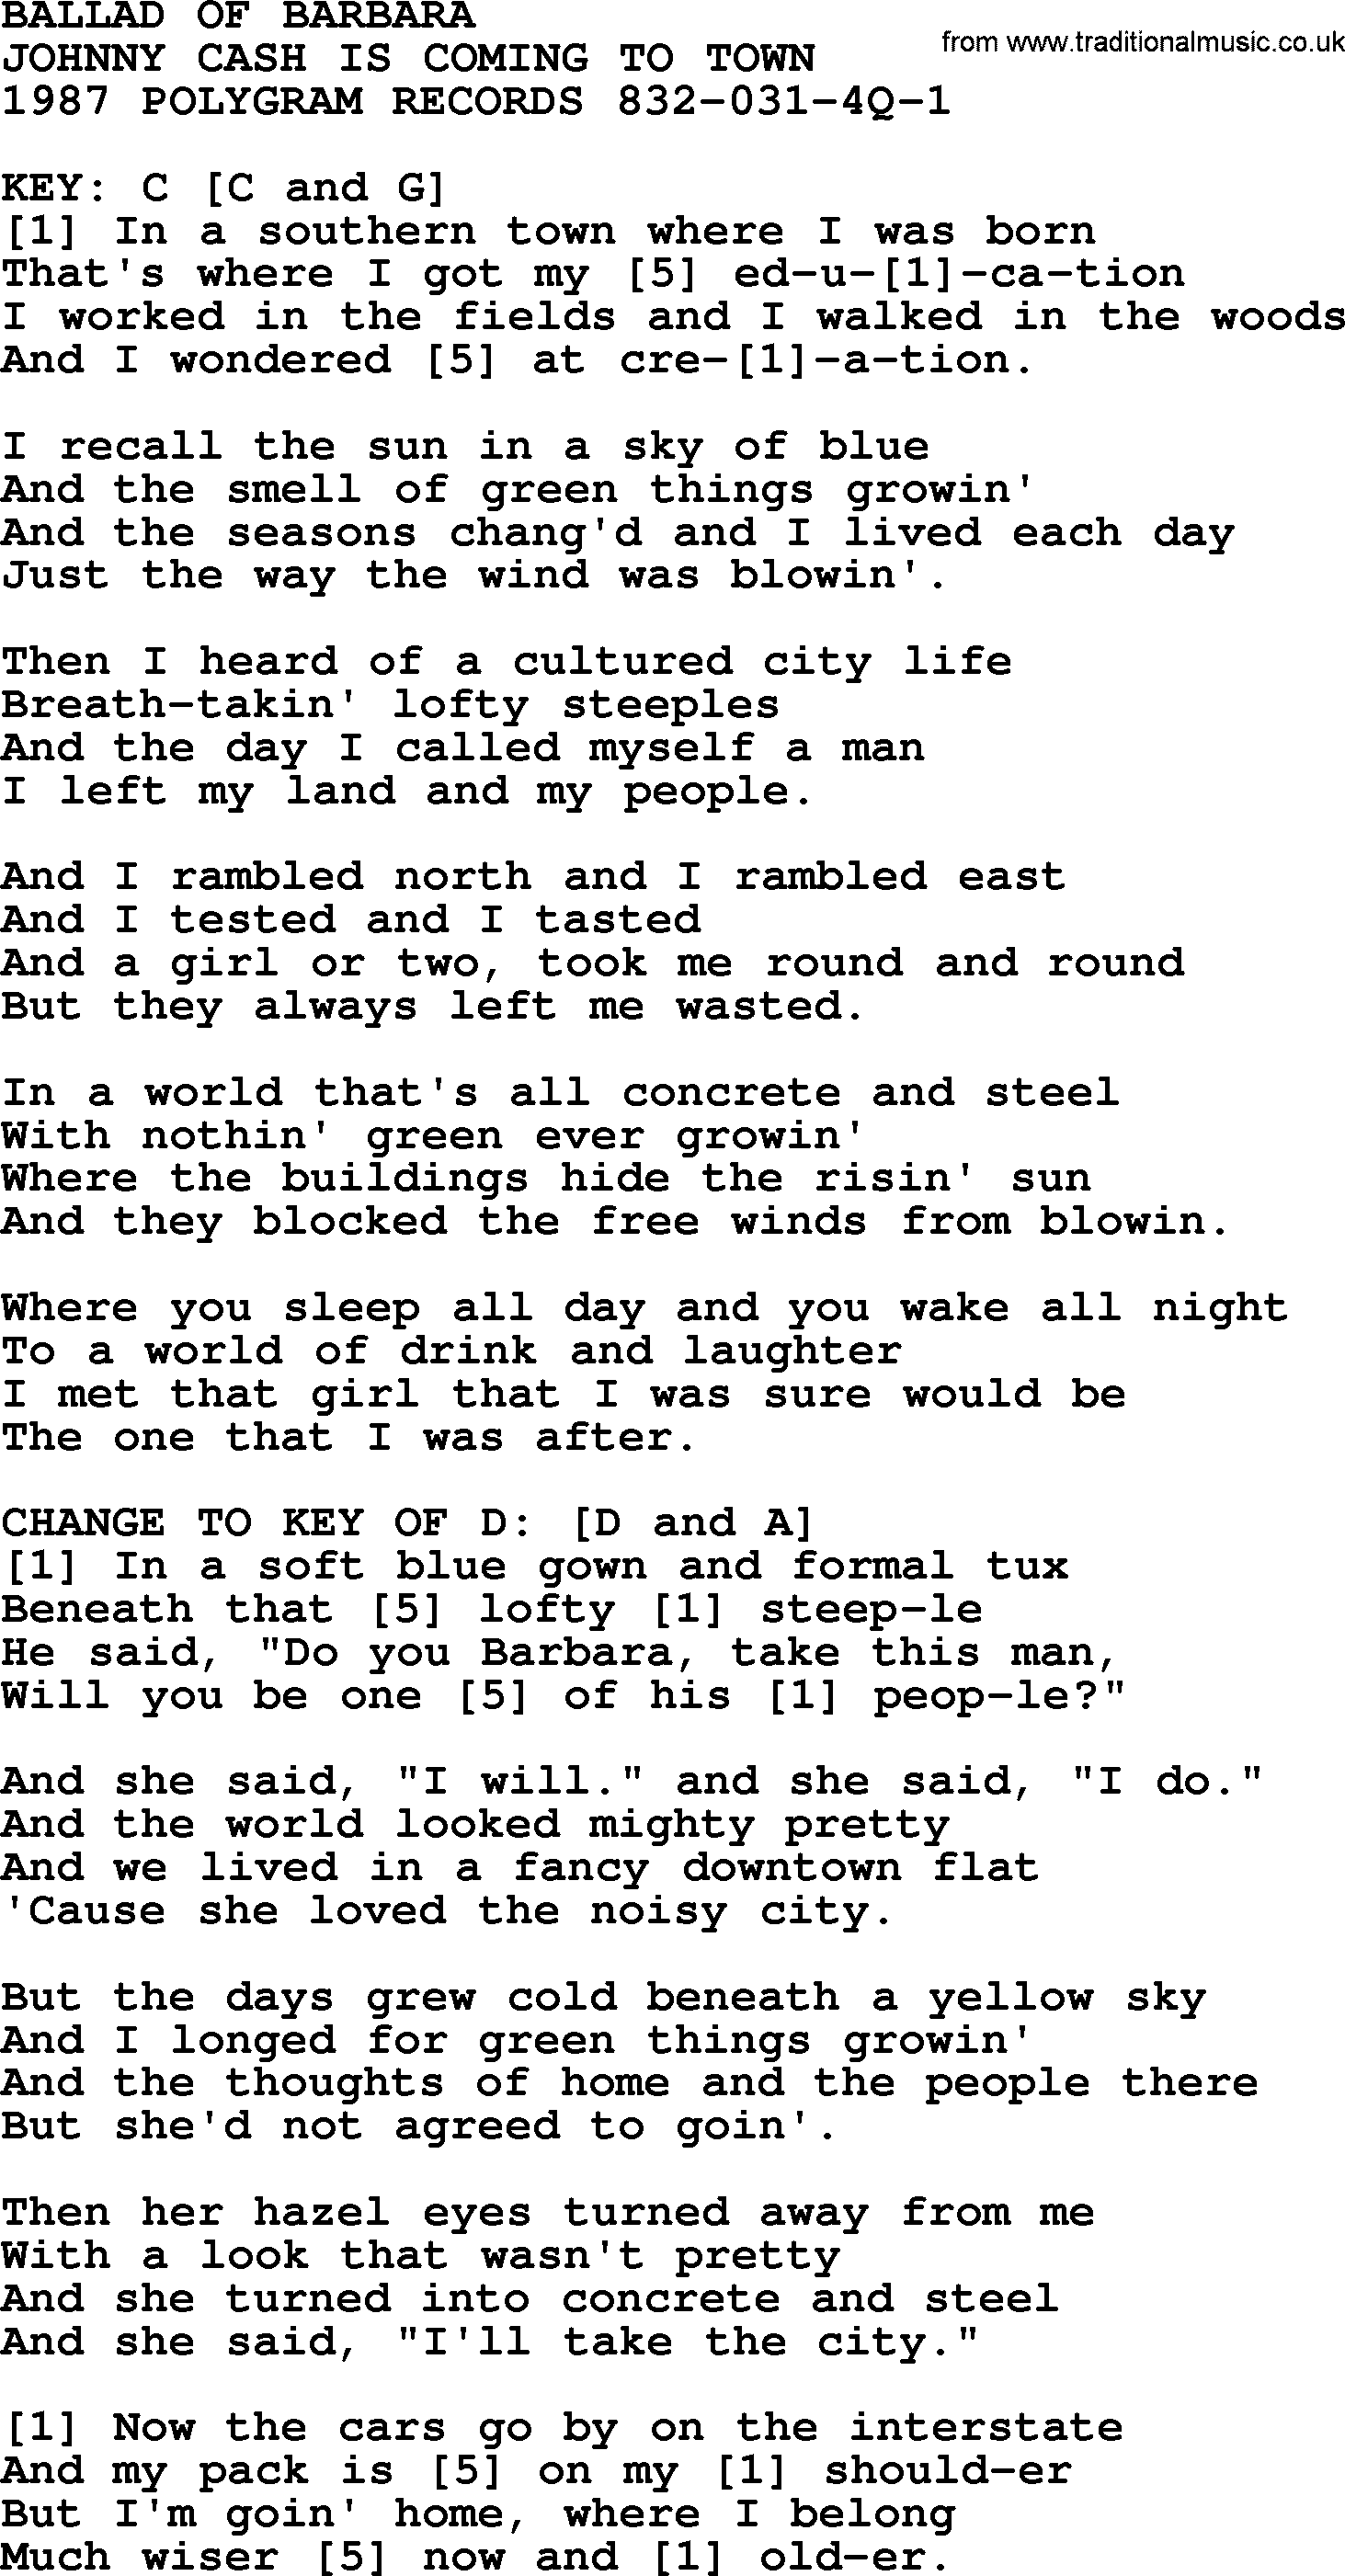 Johnny Cash song Ballad Of Barbara, lyrics and chords